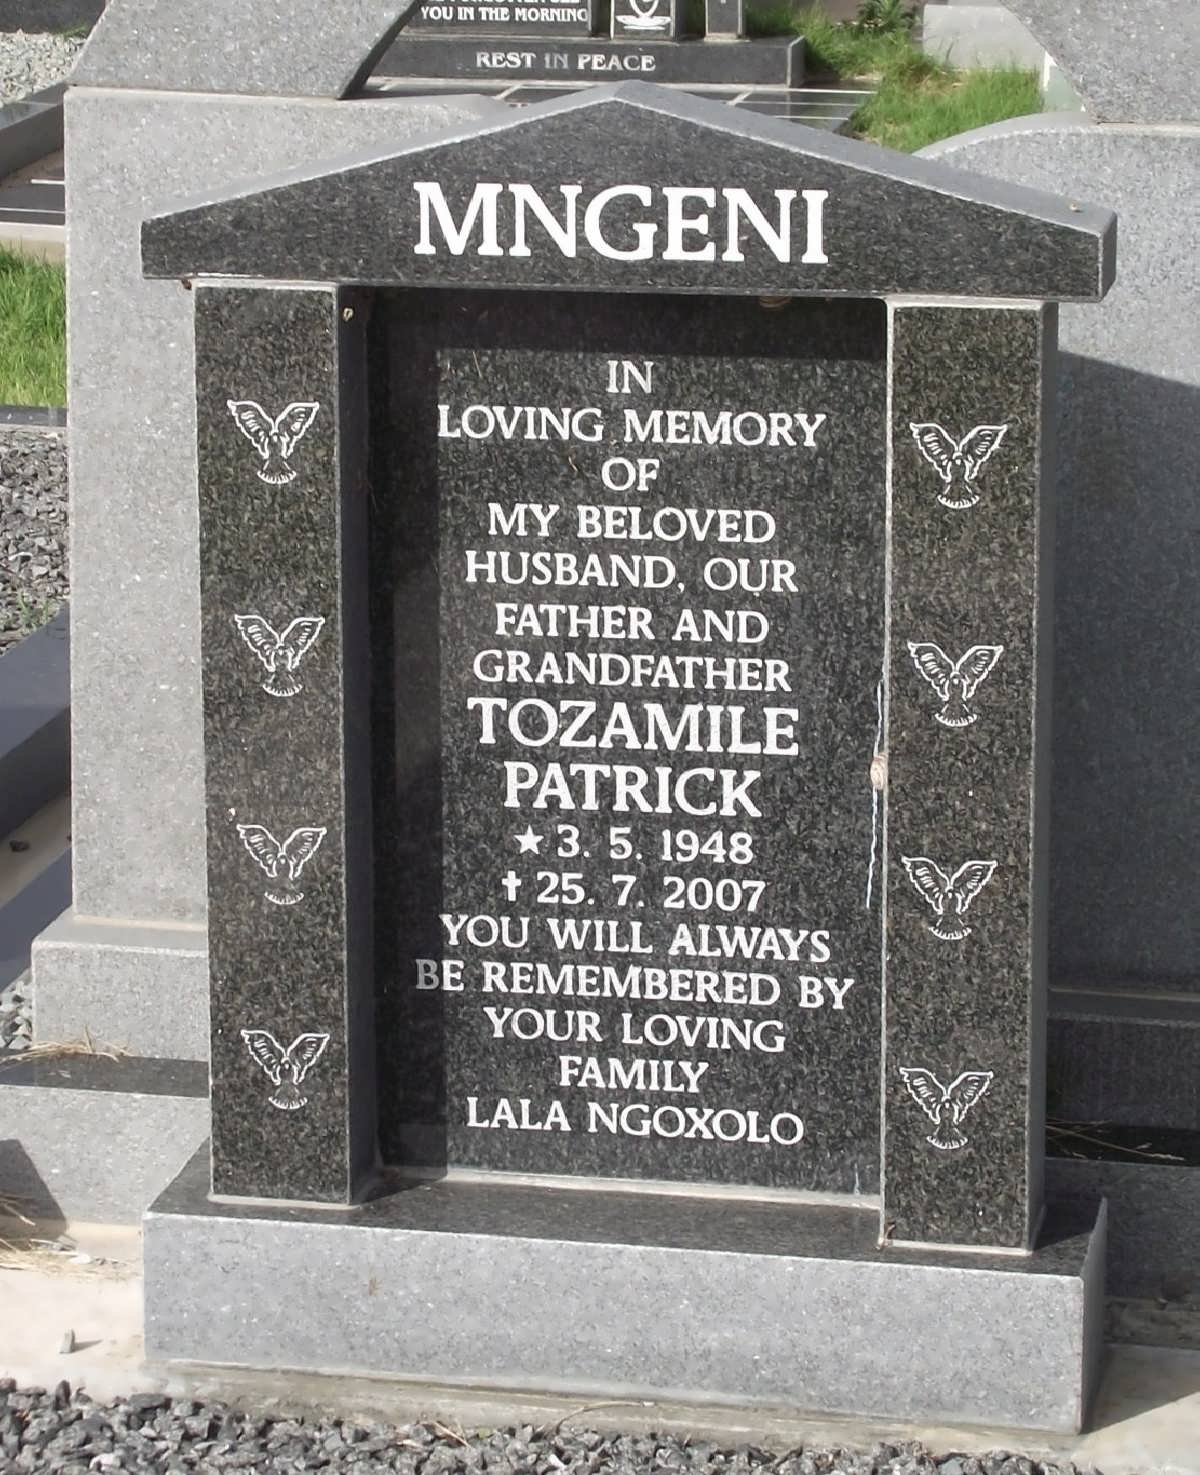 MNGENI Tozamile Patrick 1948-2007